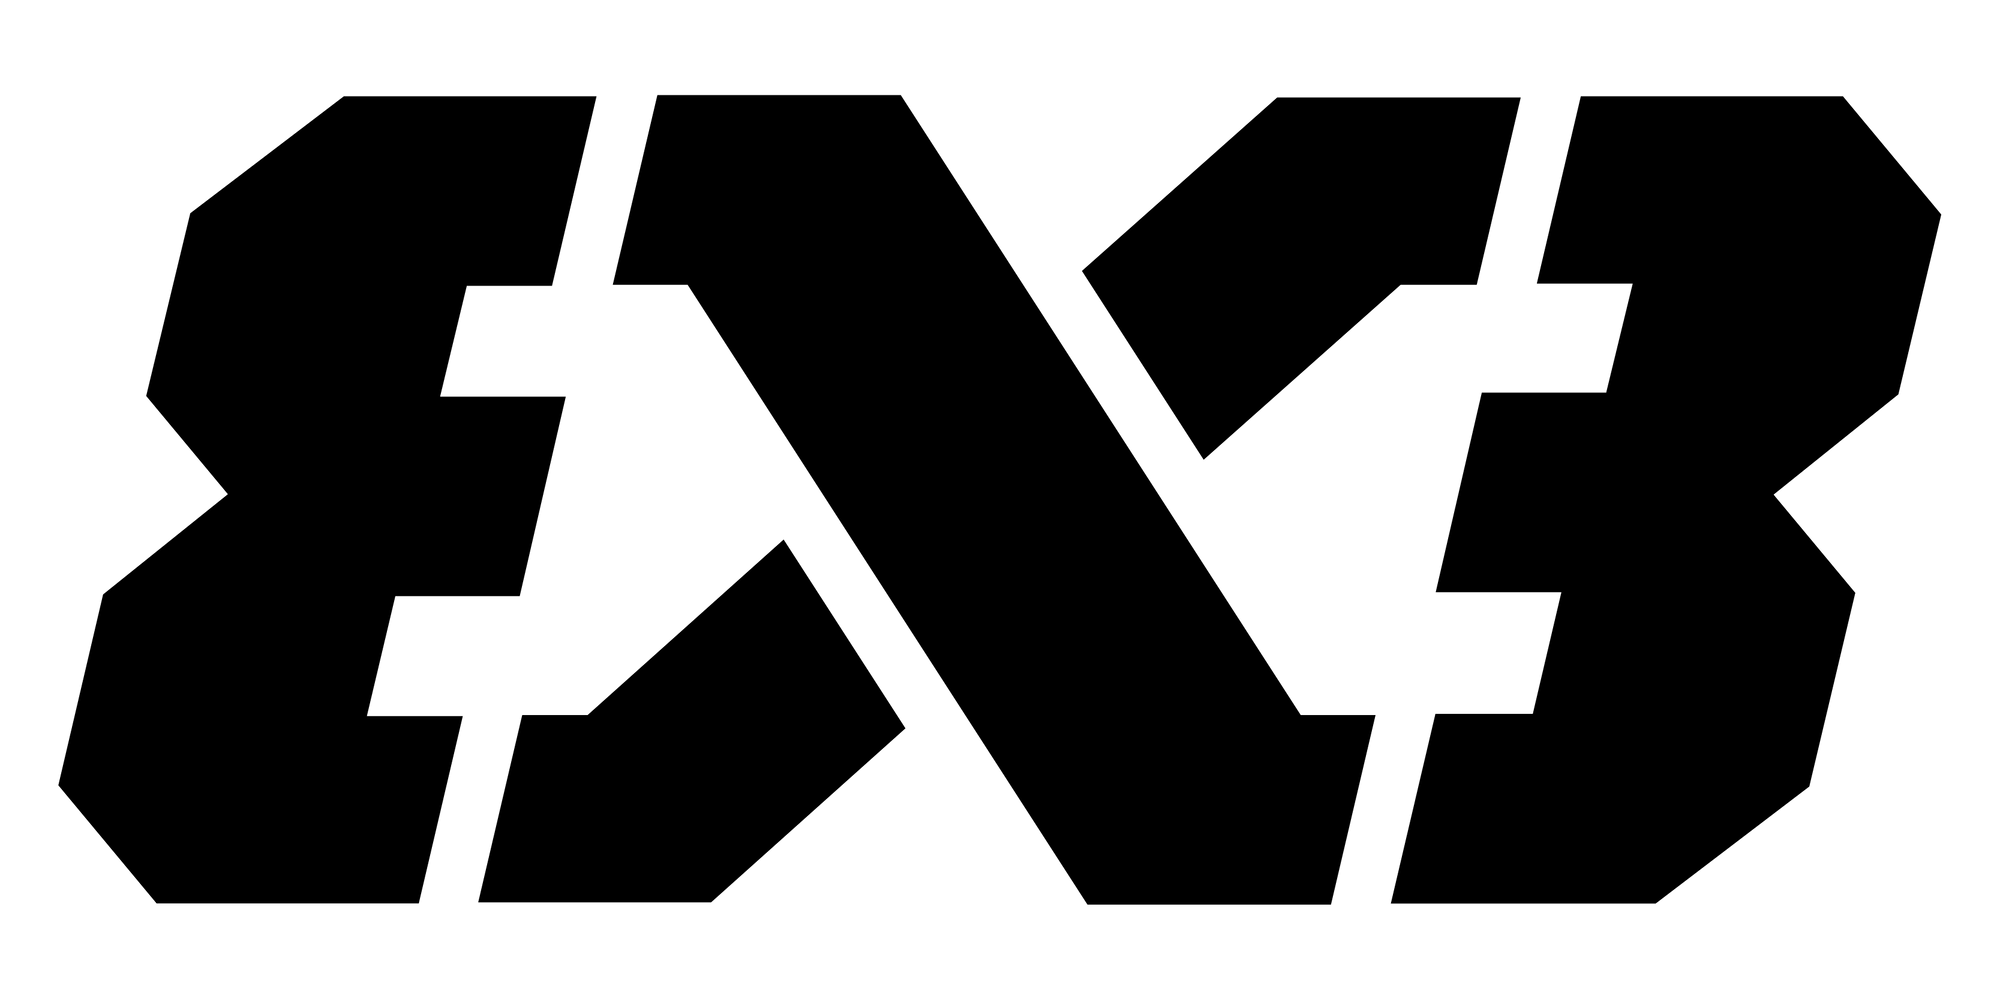 3к 4. FIBA 3x3. FIBA 3x3 logo. Логотип 3х3. Логотип x.